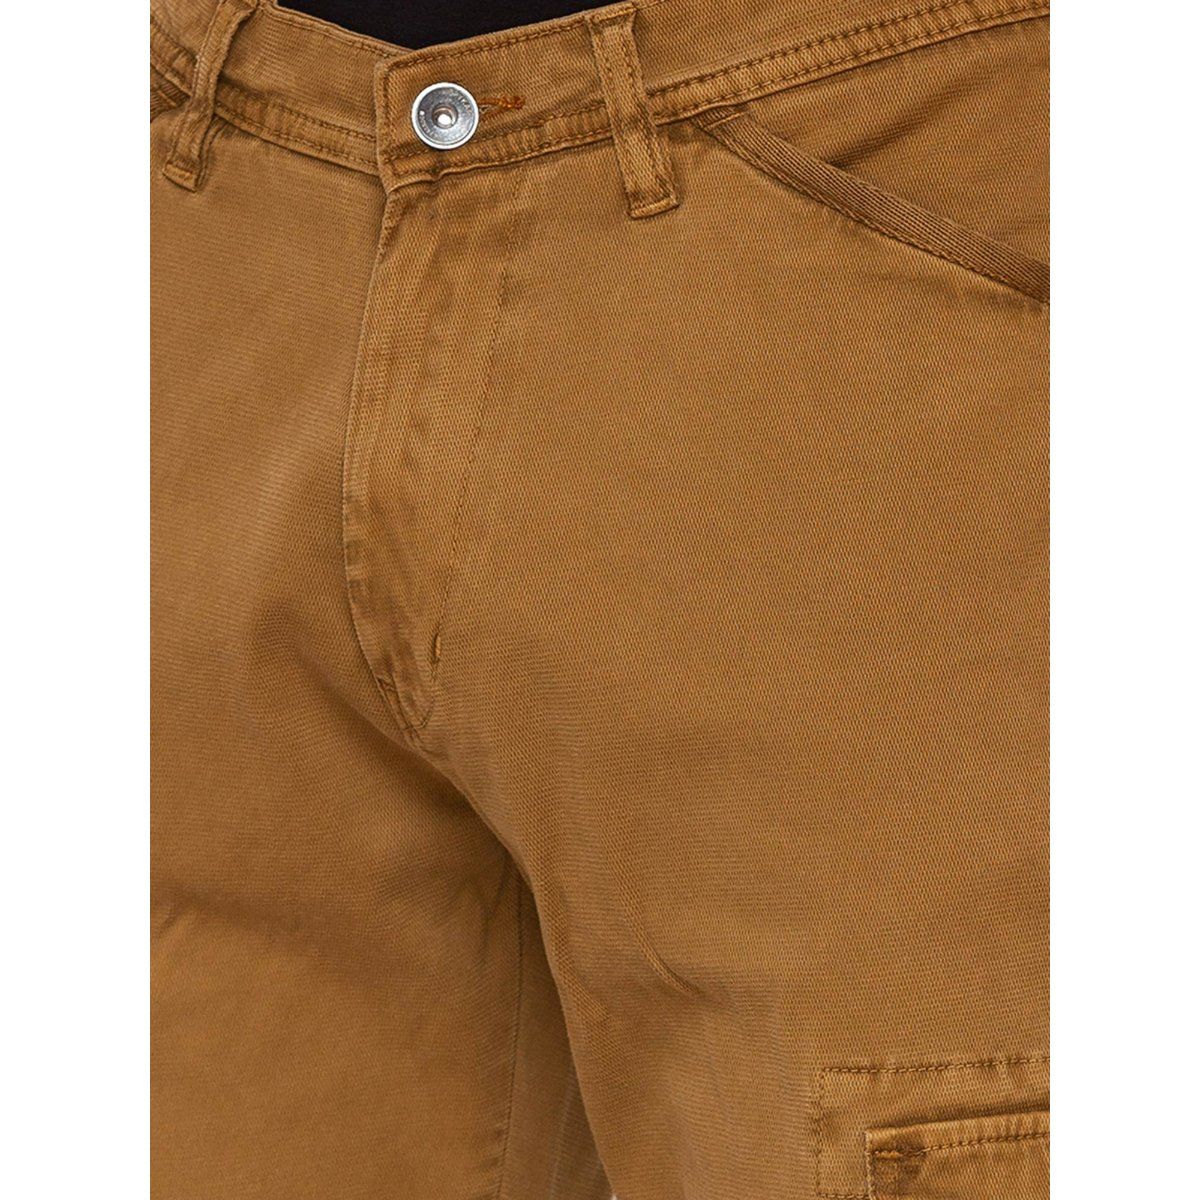 Spykar Beige Cotton Regular Fit Straight Length Trousers For Men -  vot02bbcp019beige